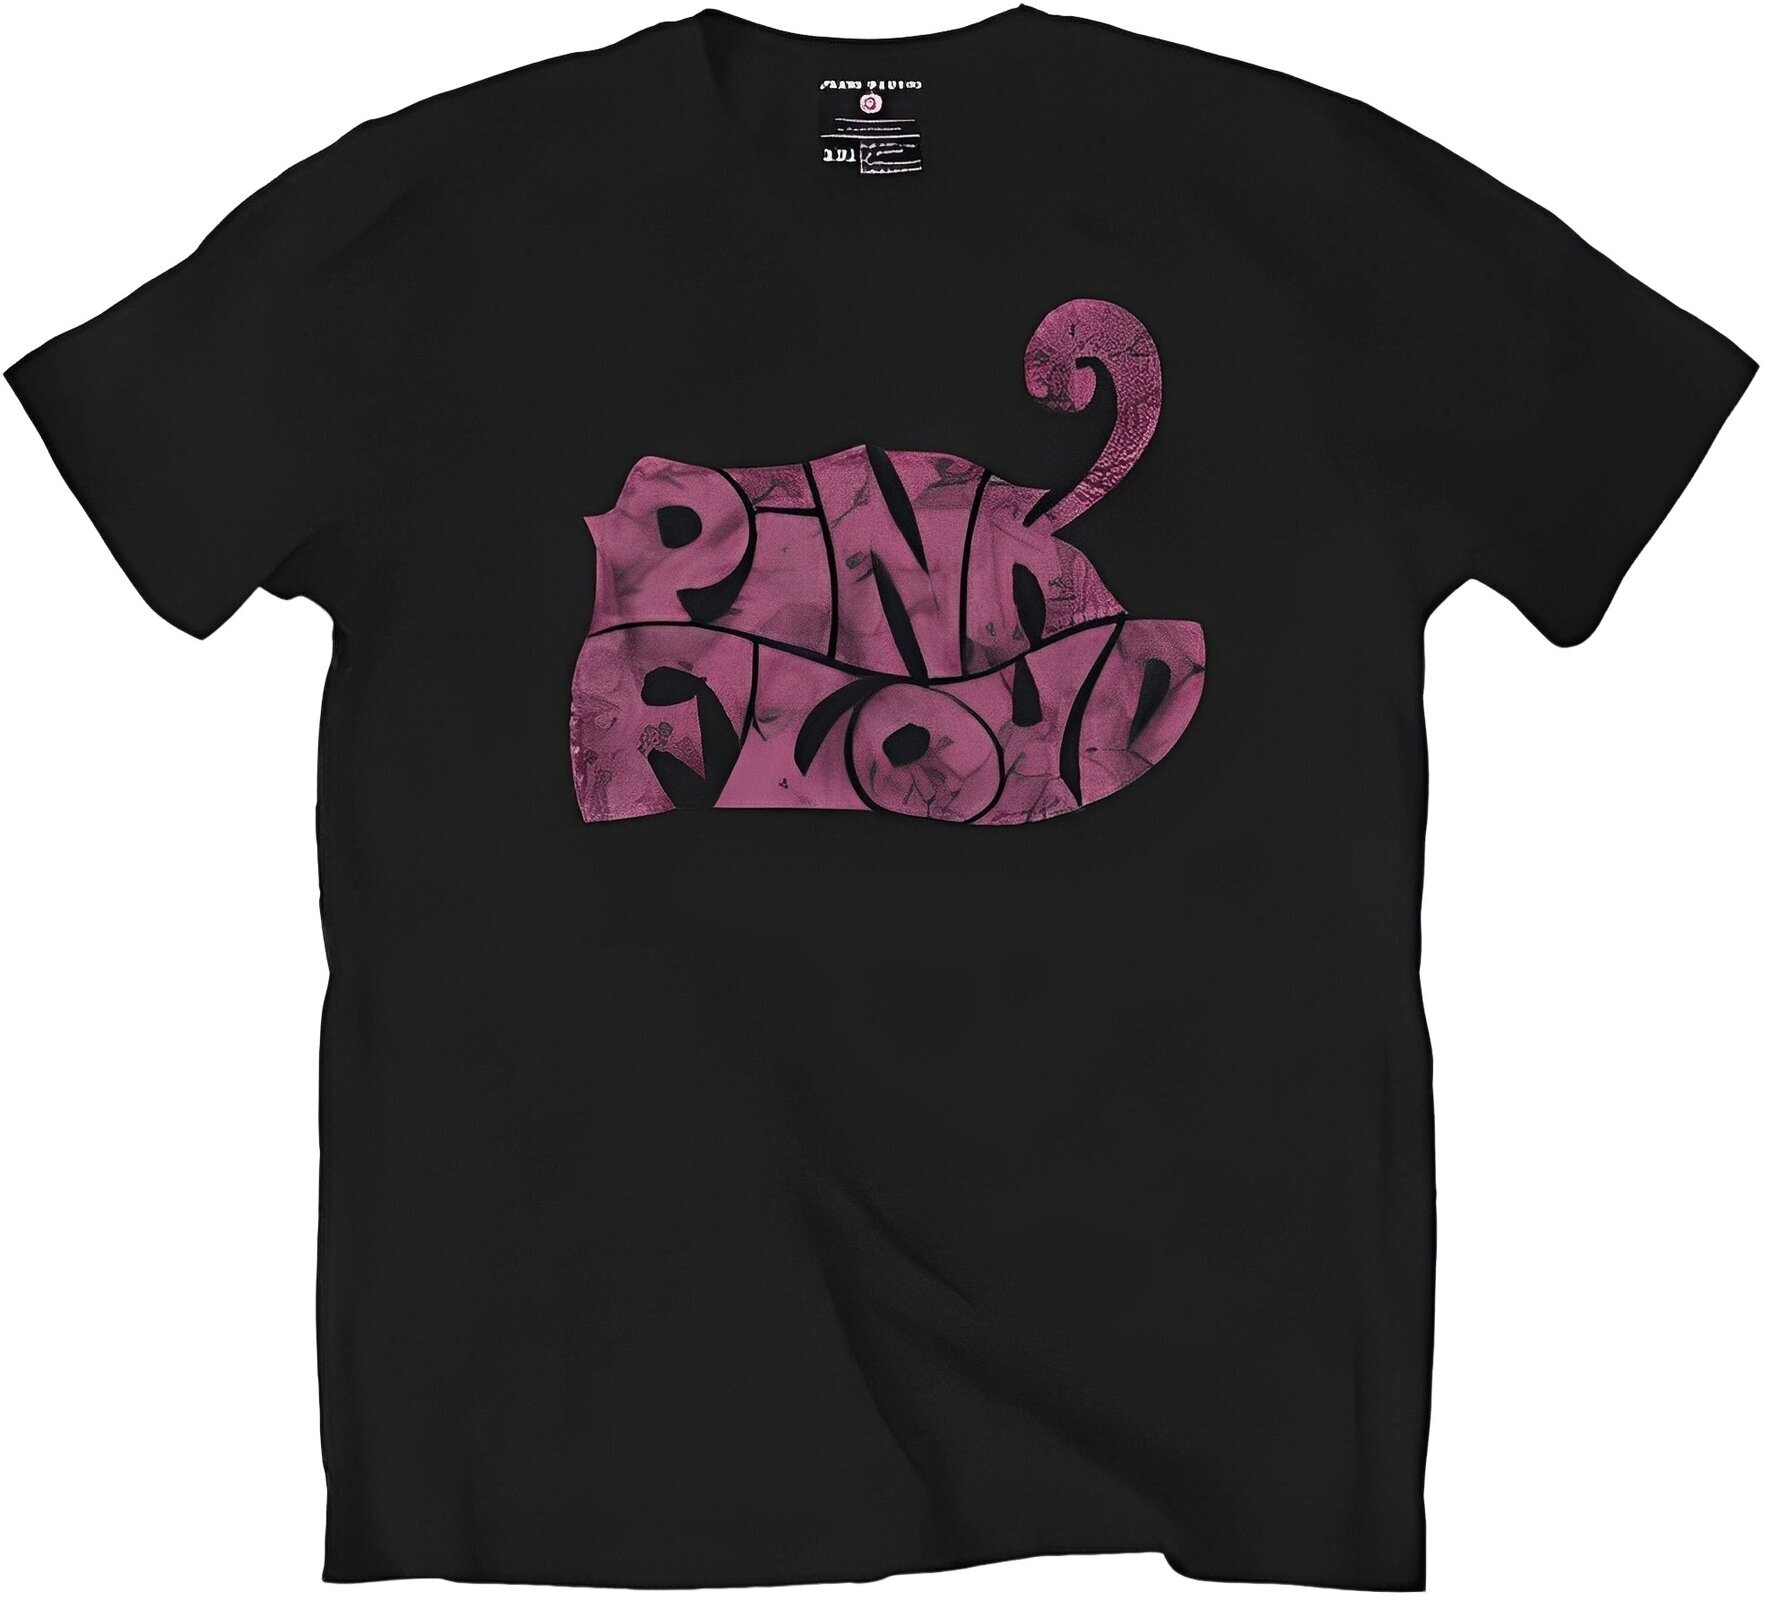 Shirt Pink Floyd Shirt Swirl Logo Black S